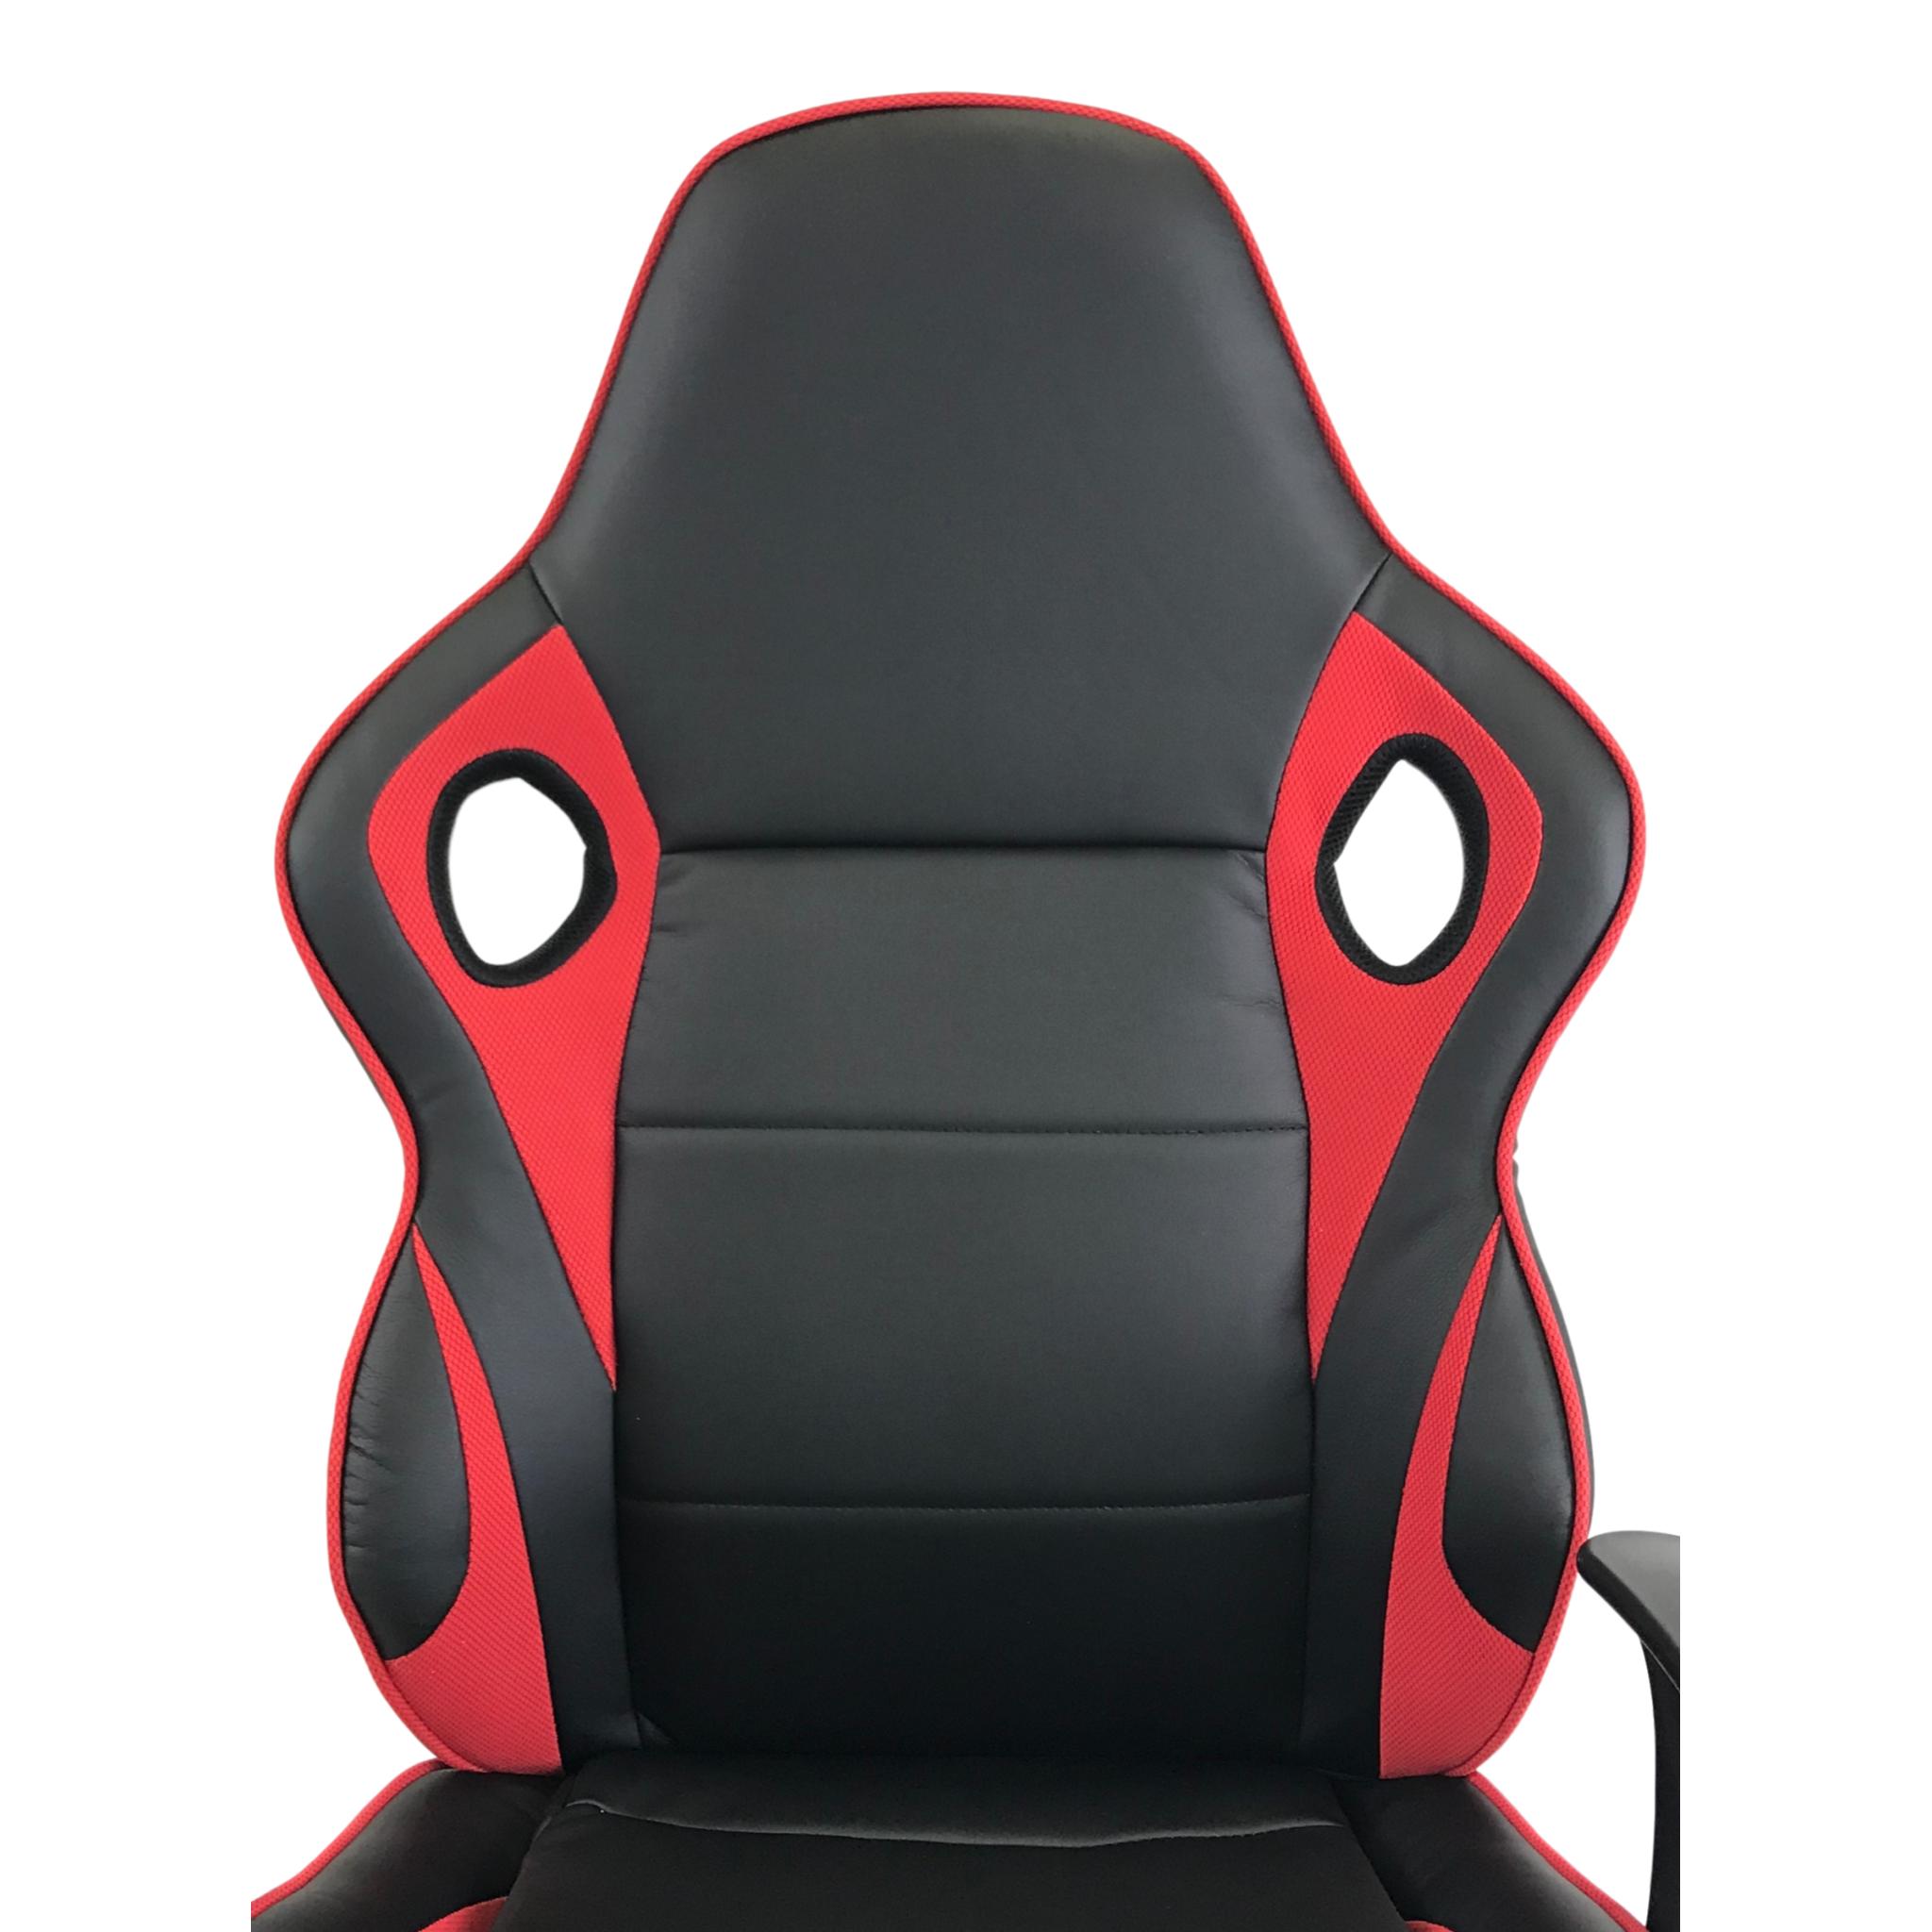 ViscoLogic Lotus Ergonomic Gaming Racing Styled Office Chair